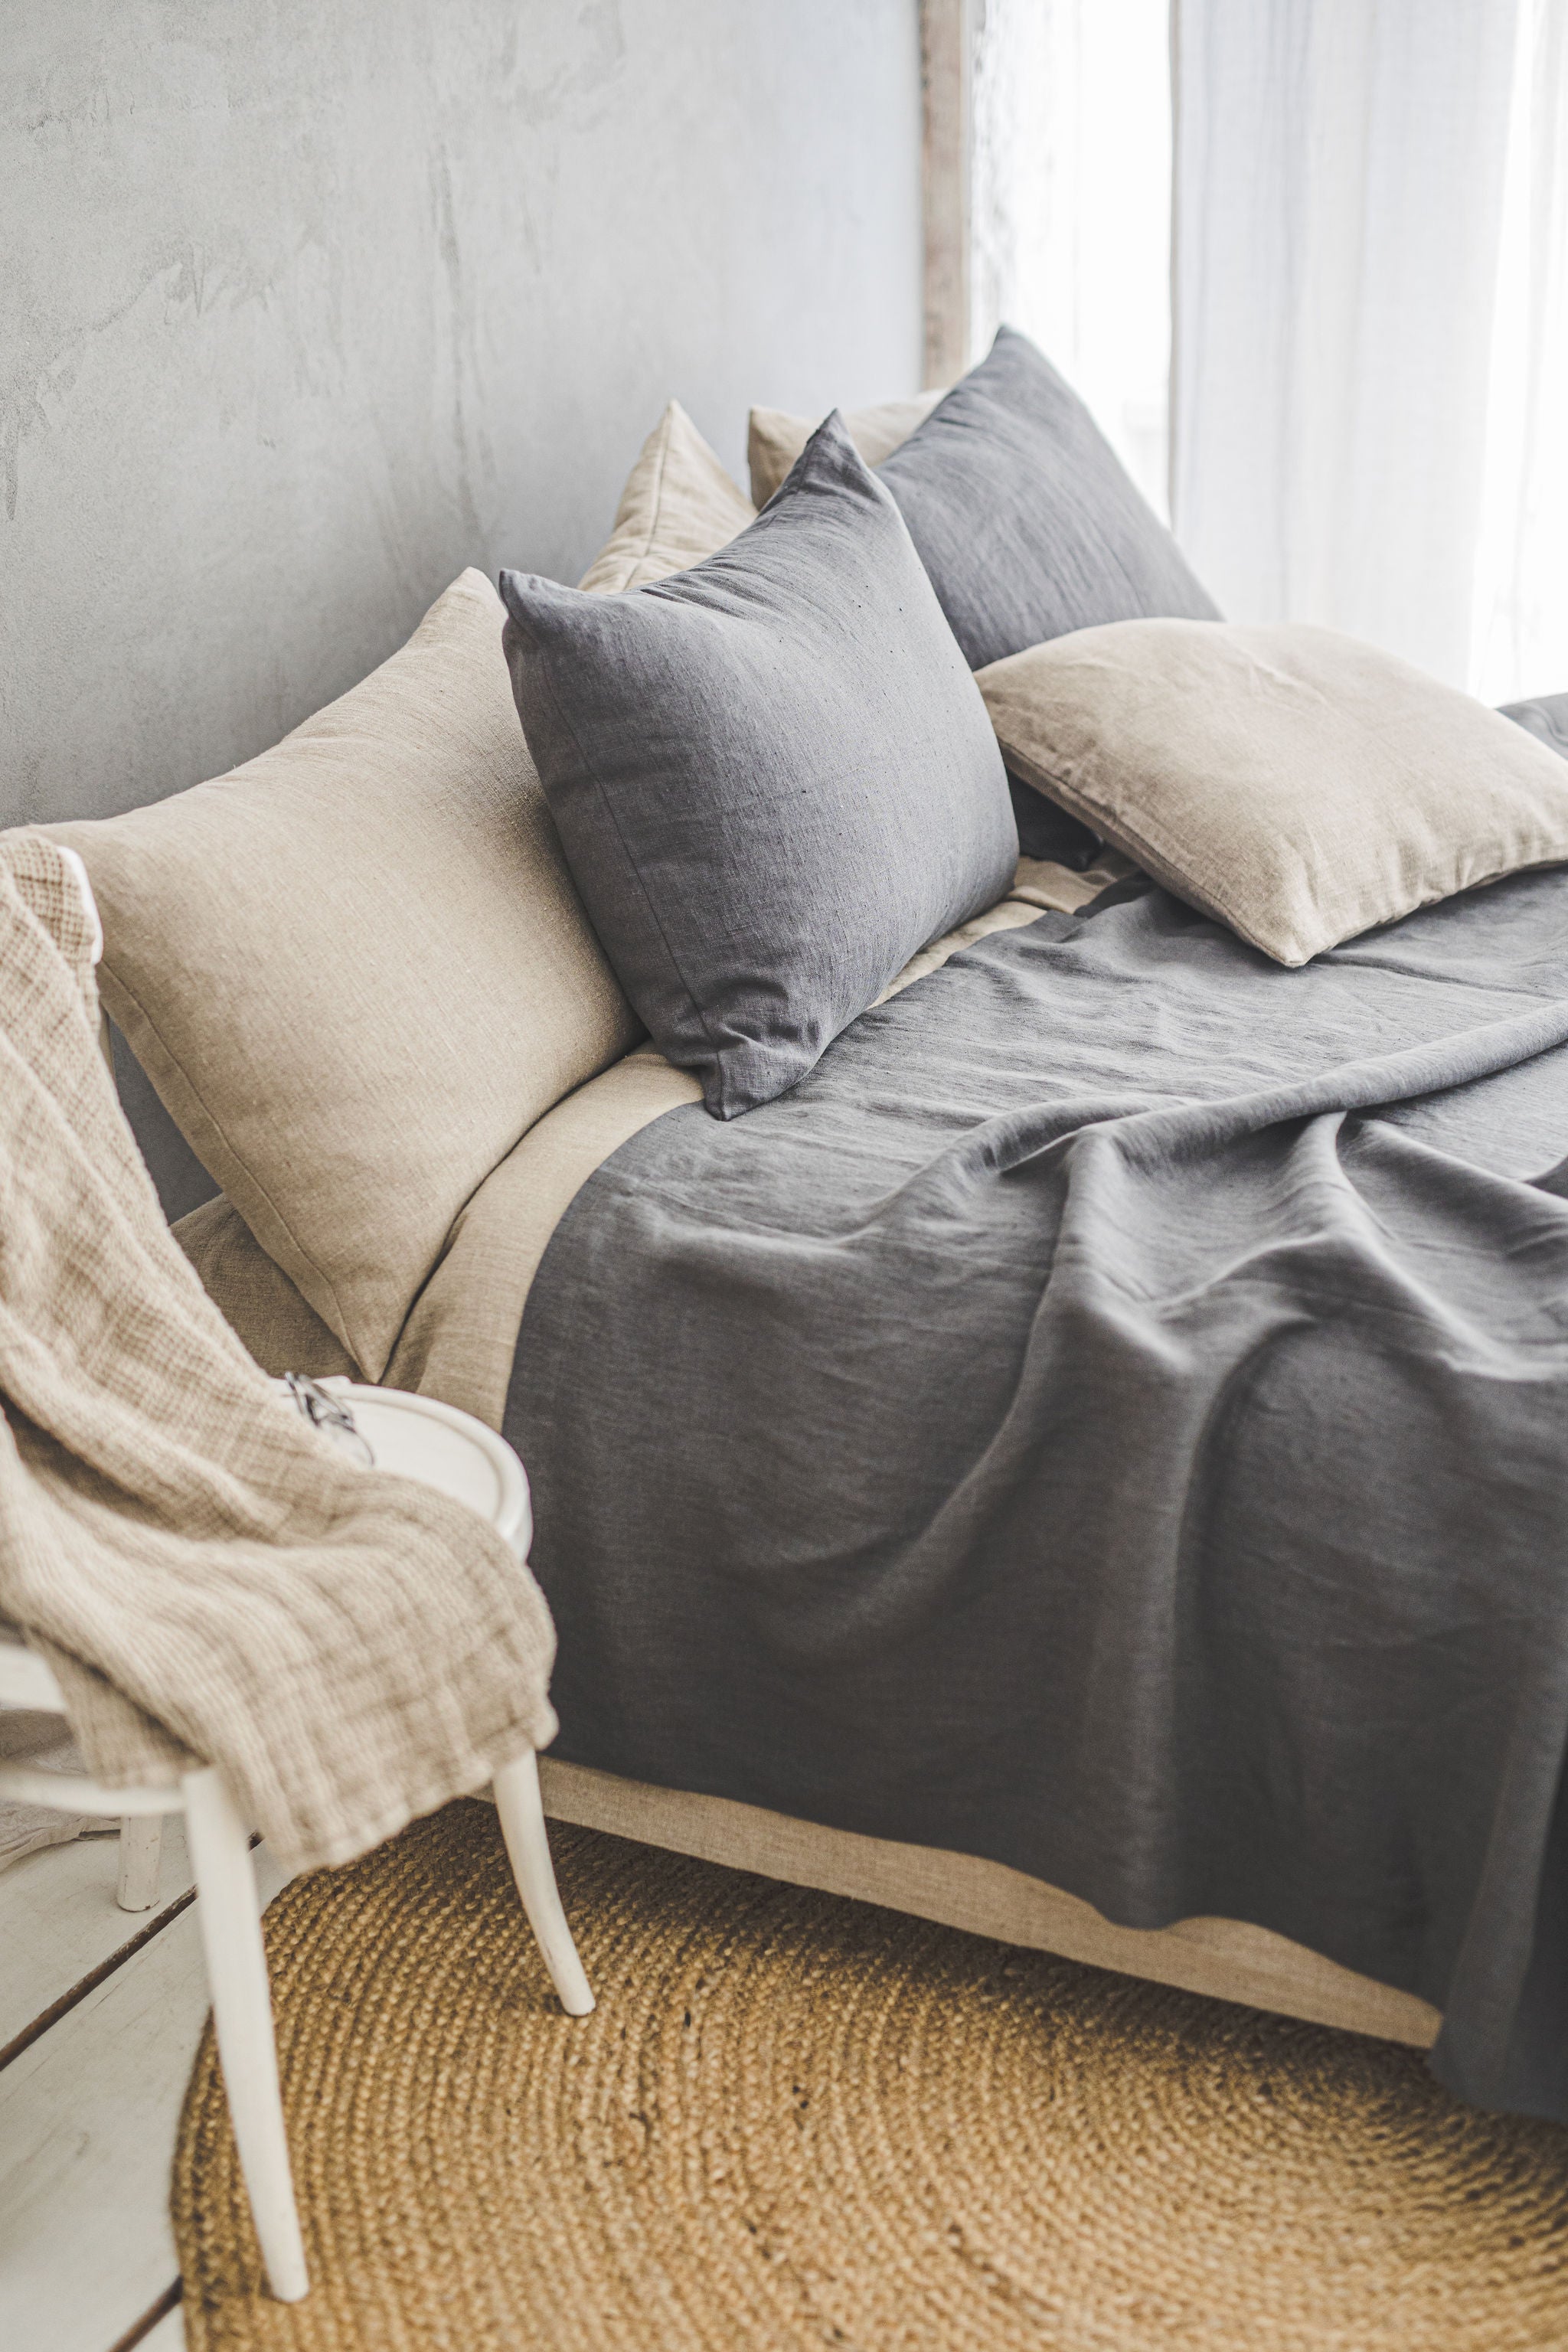 Charcoal gray linen bedspread